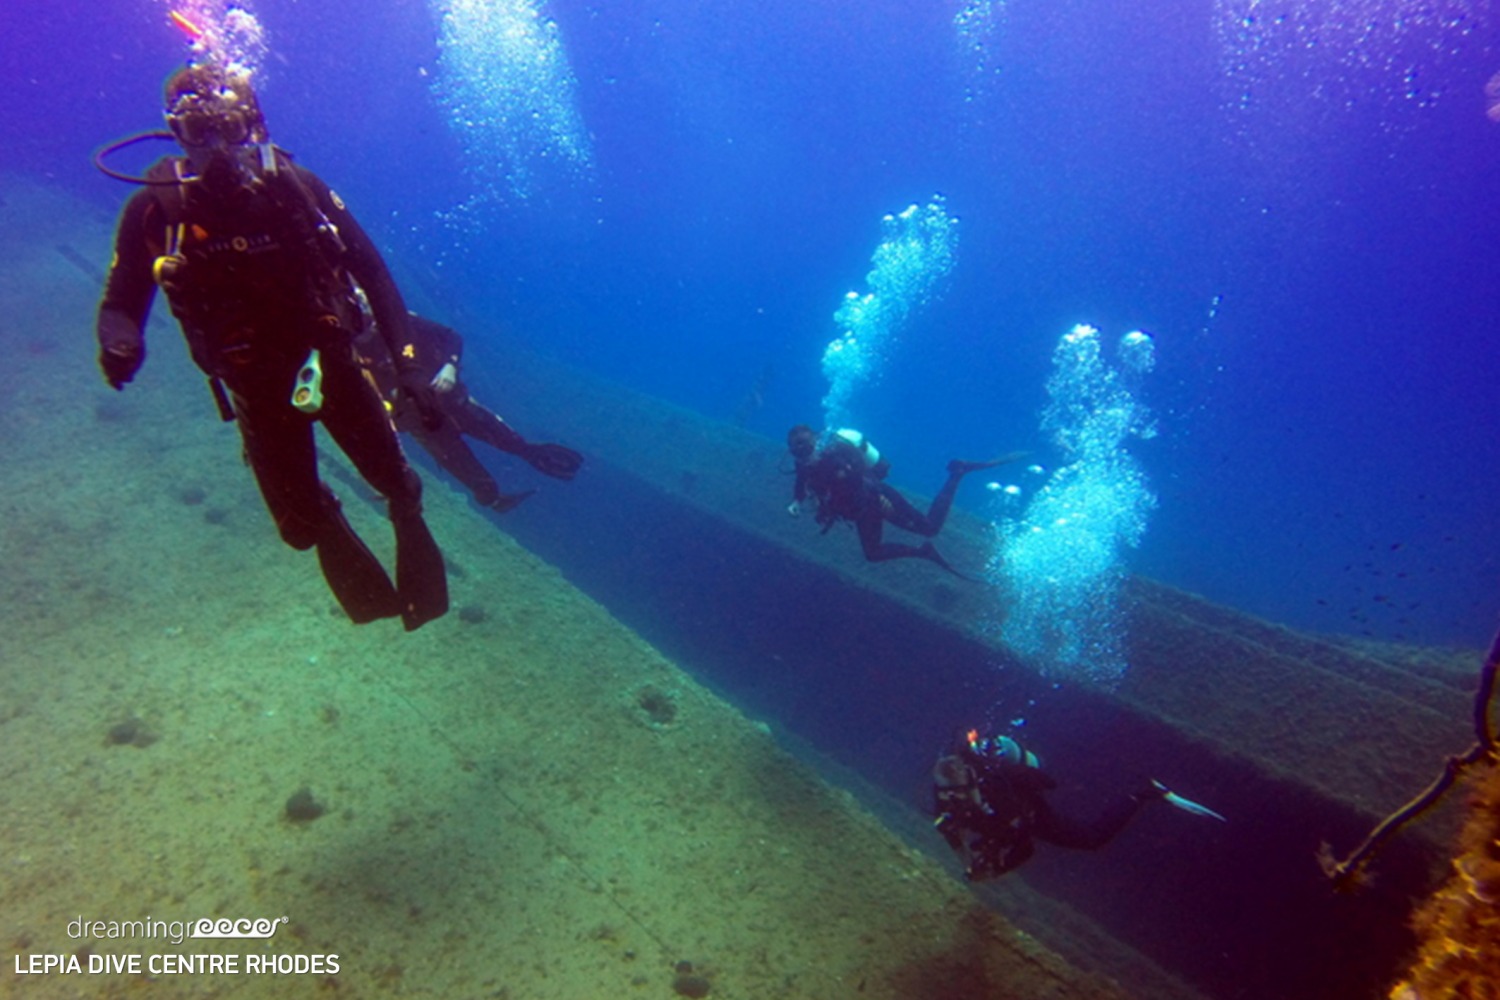 Lepia Dive Centre Rhodes Scuba diving in Greece